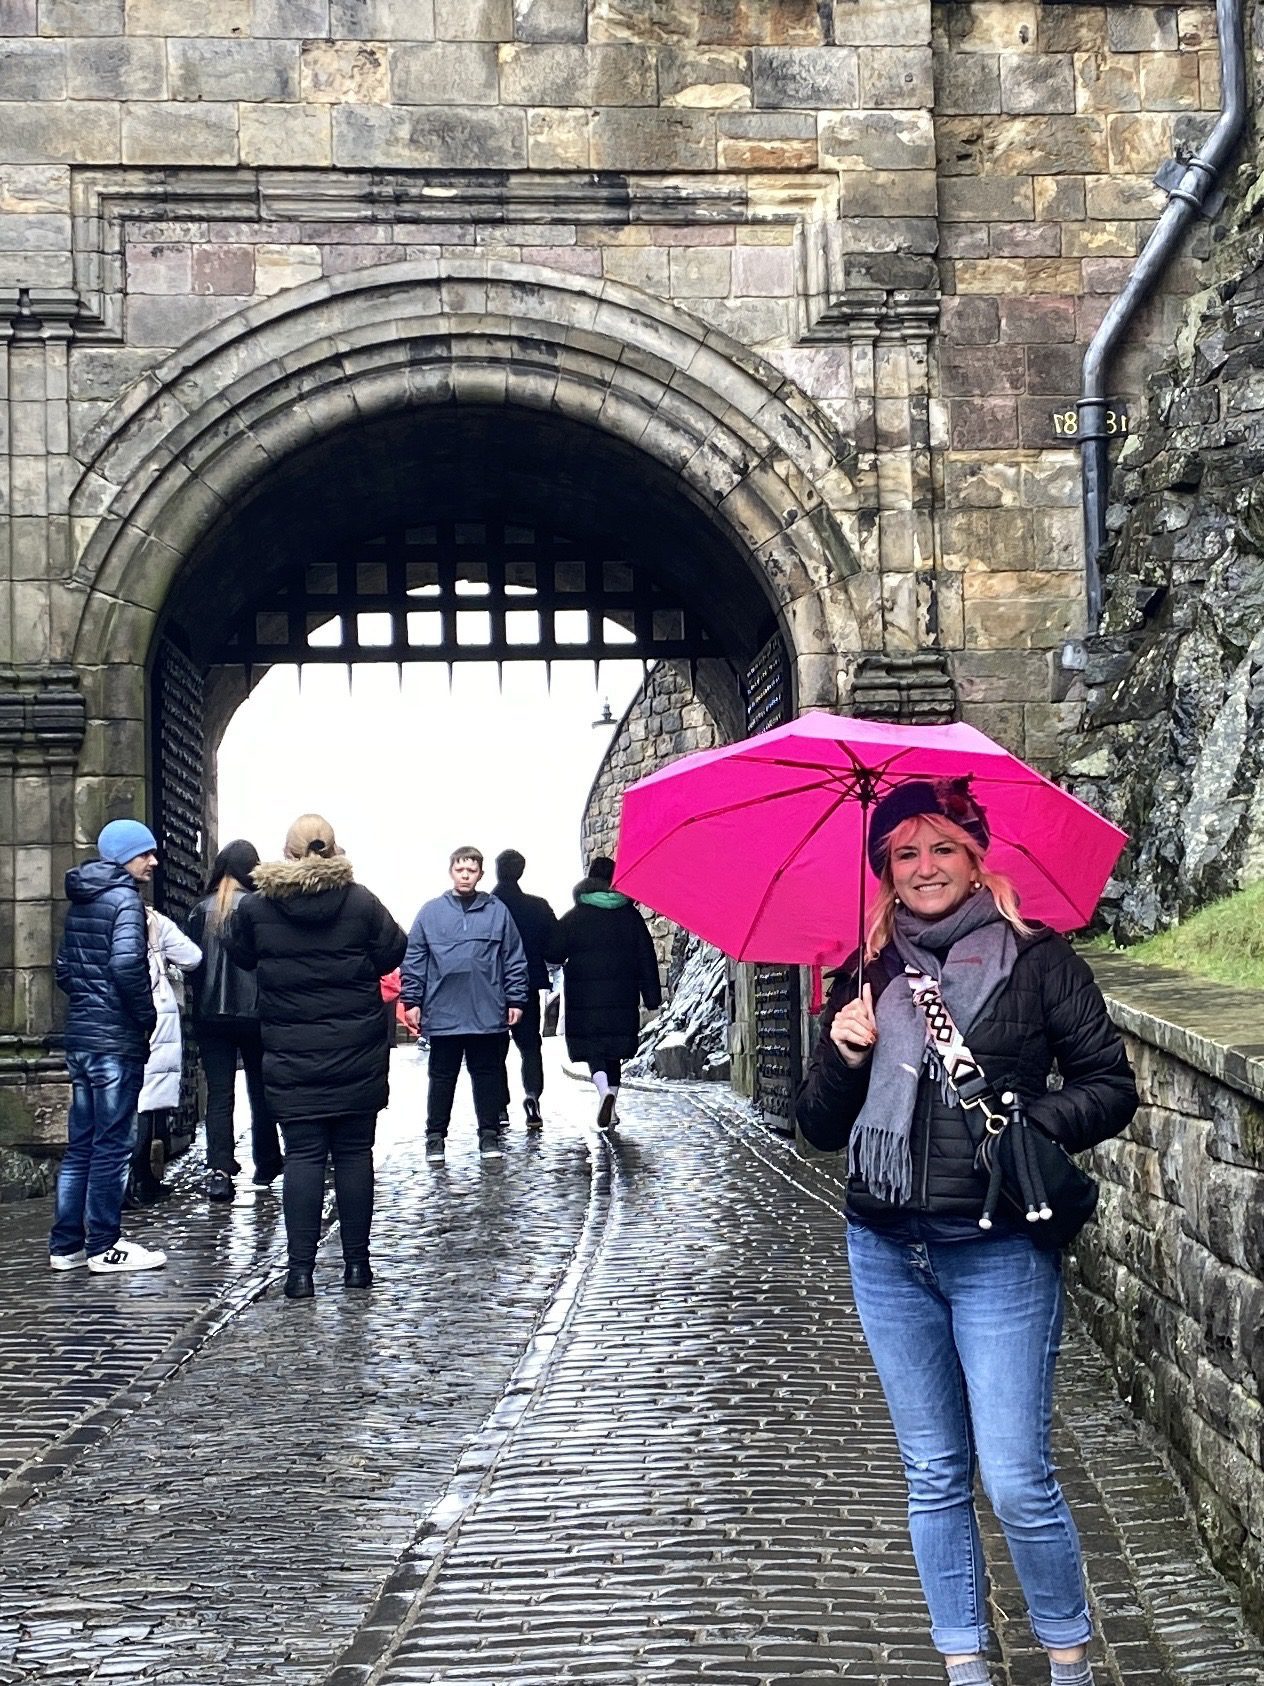 Edinburgh Castle in the rain with pink umbrella